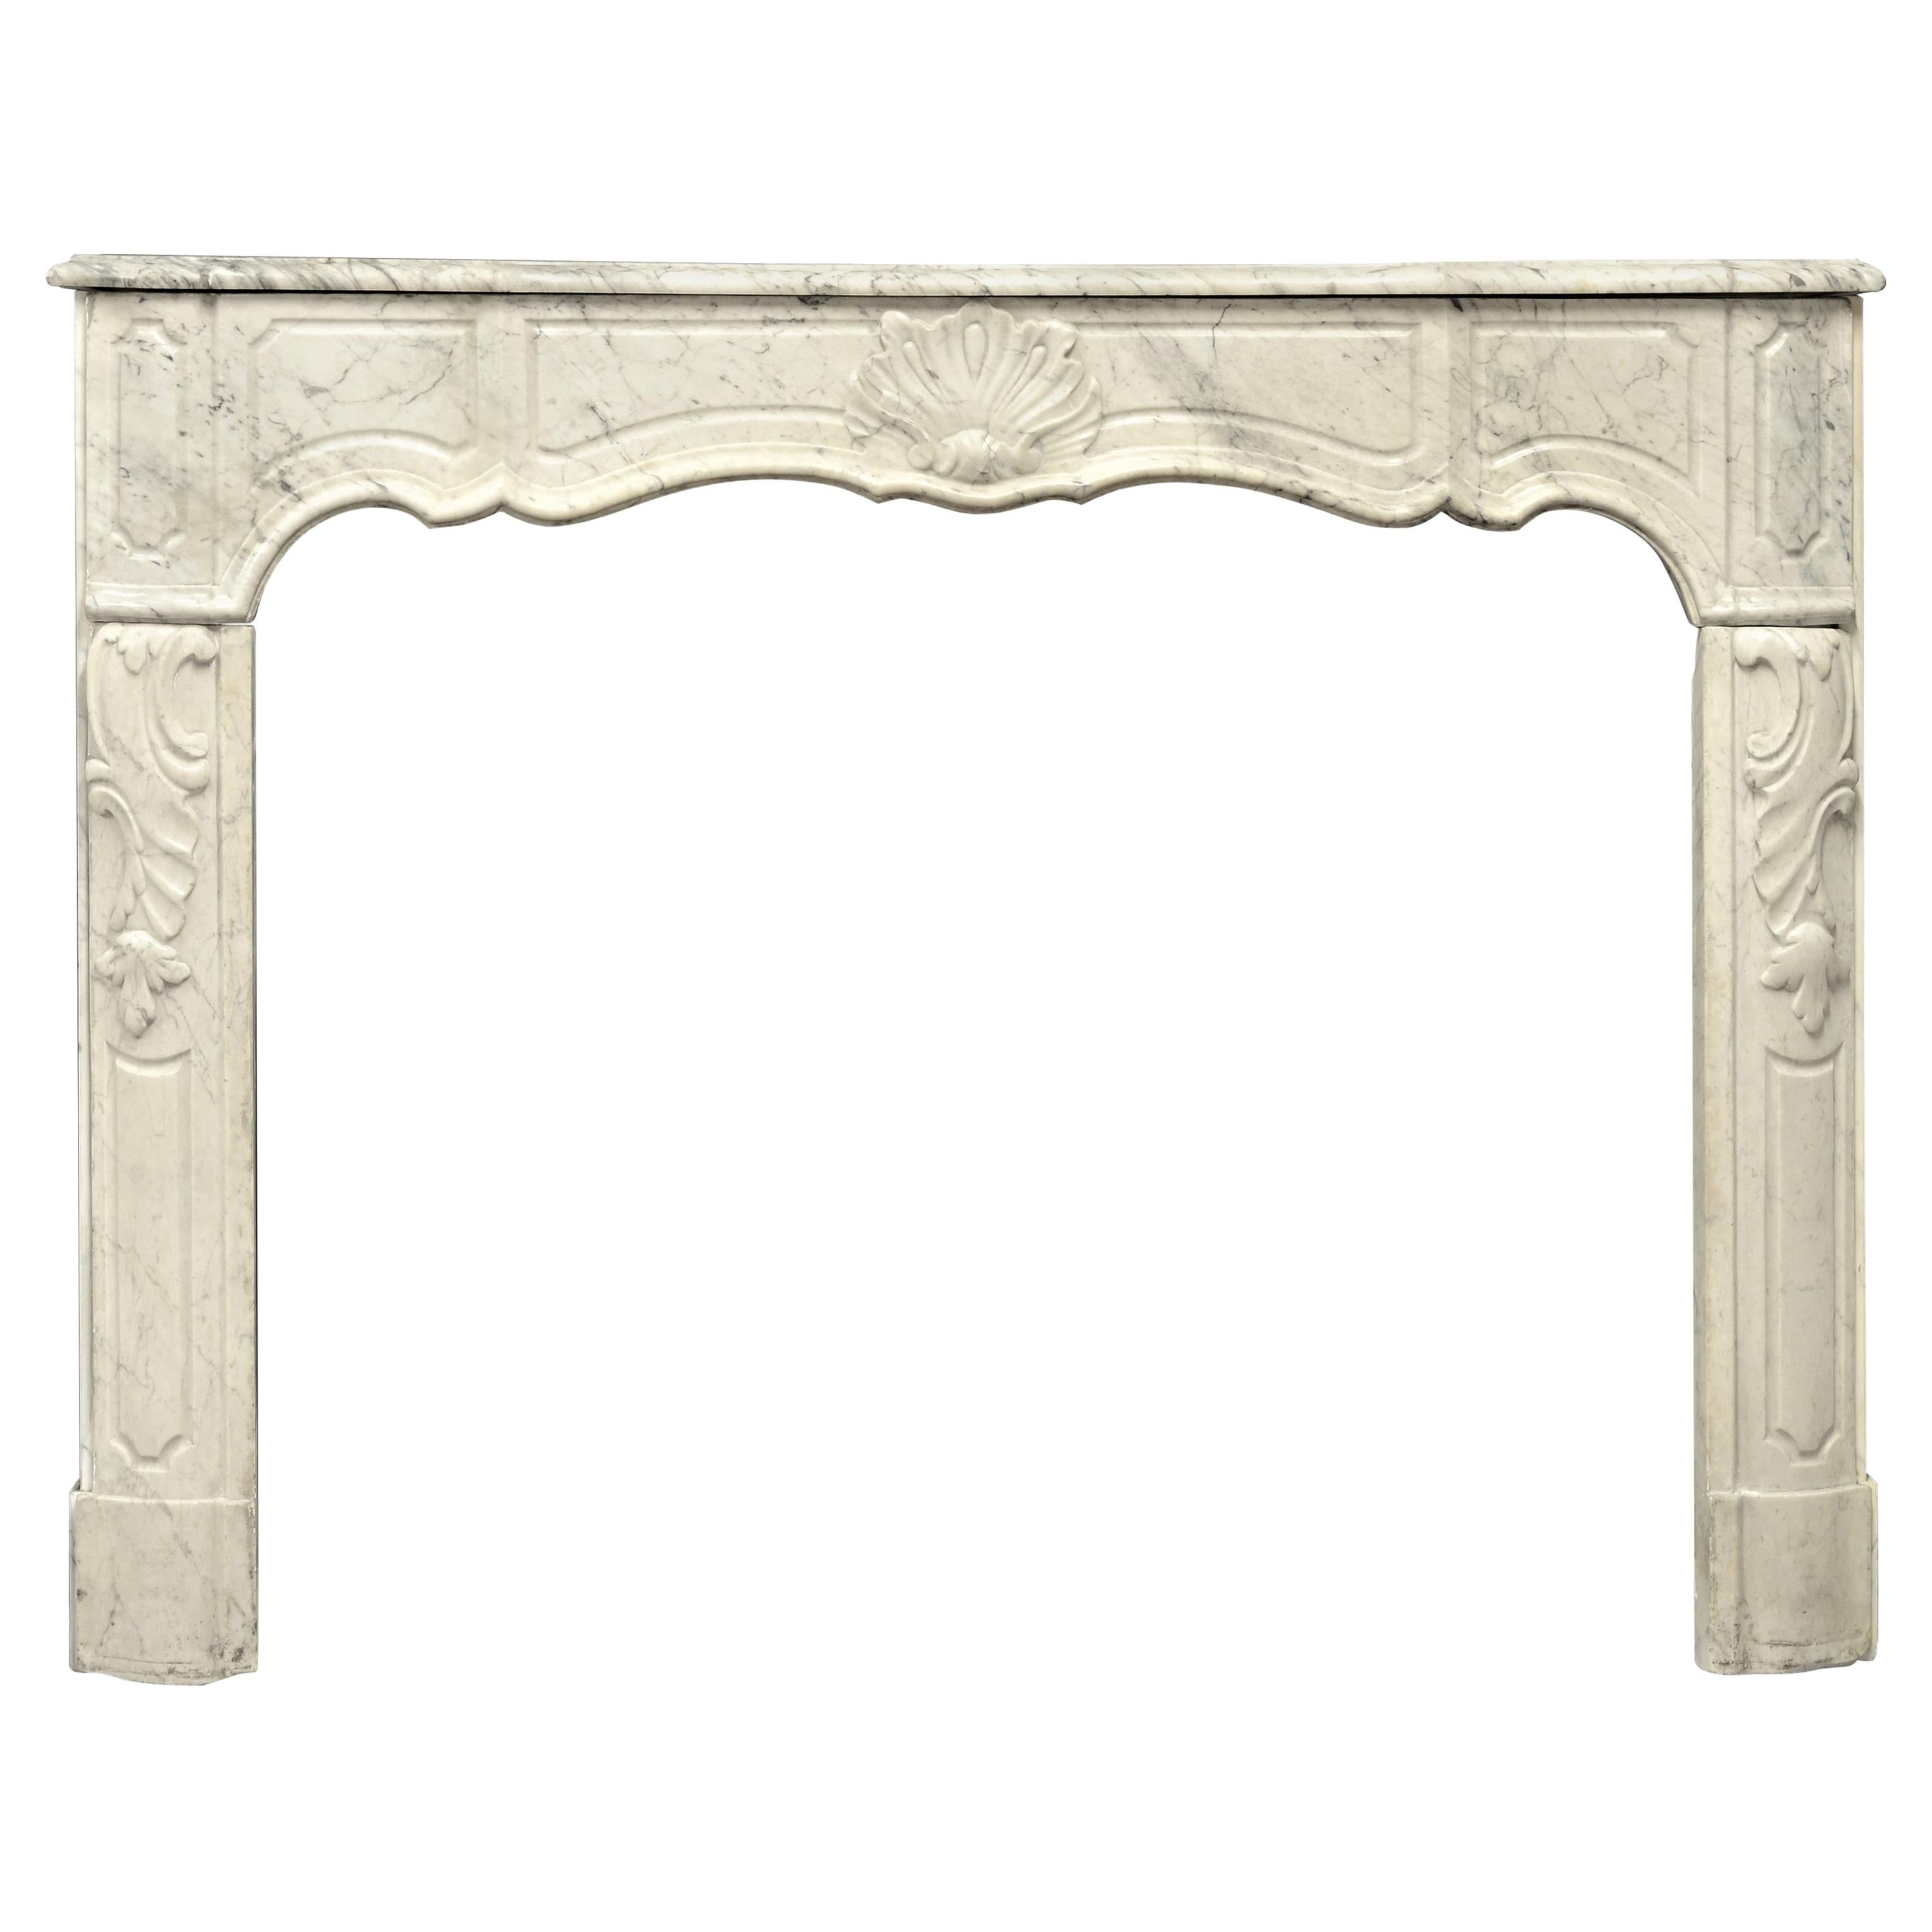 18th Century French Régence Fireplace Mantel